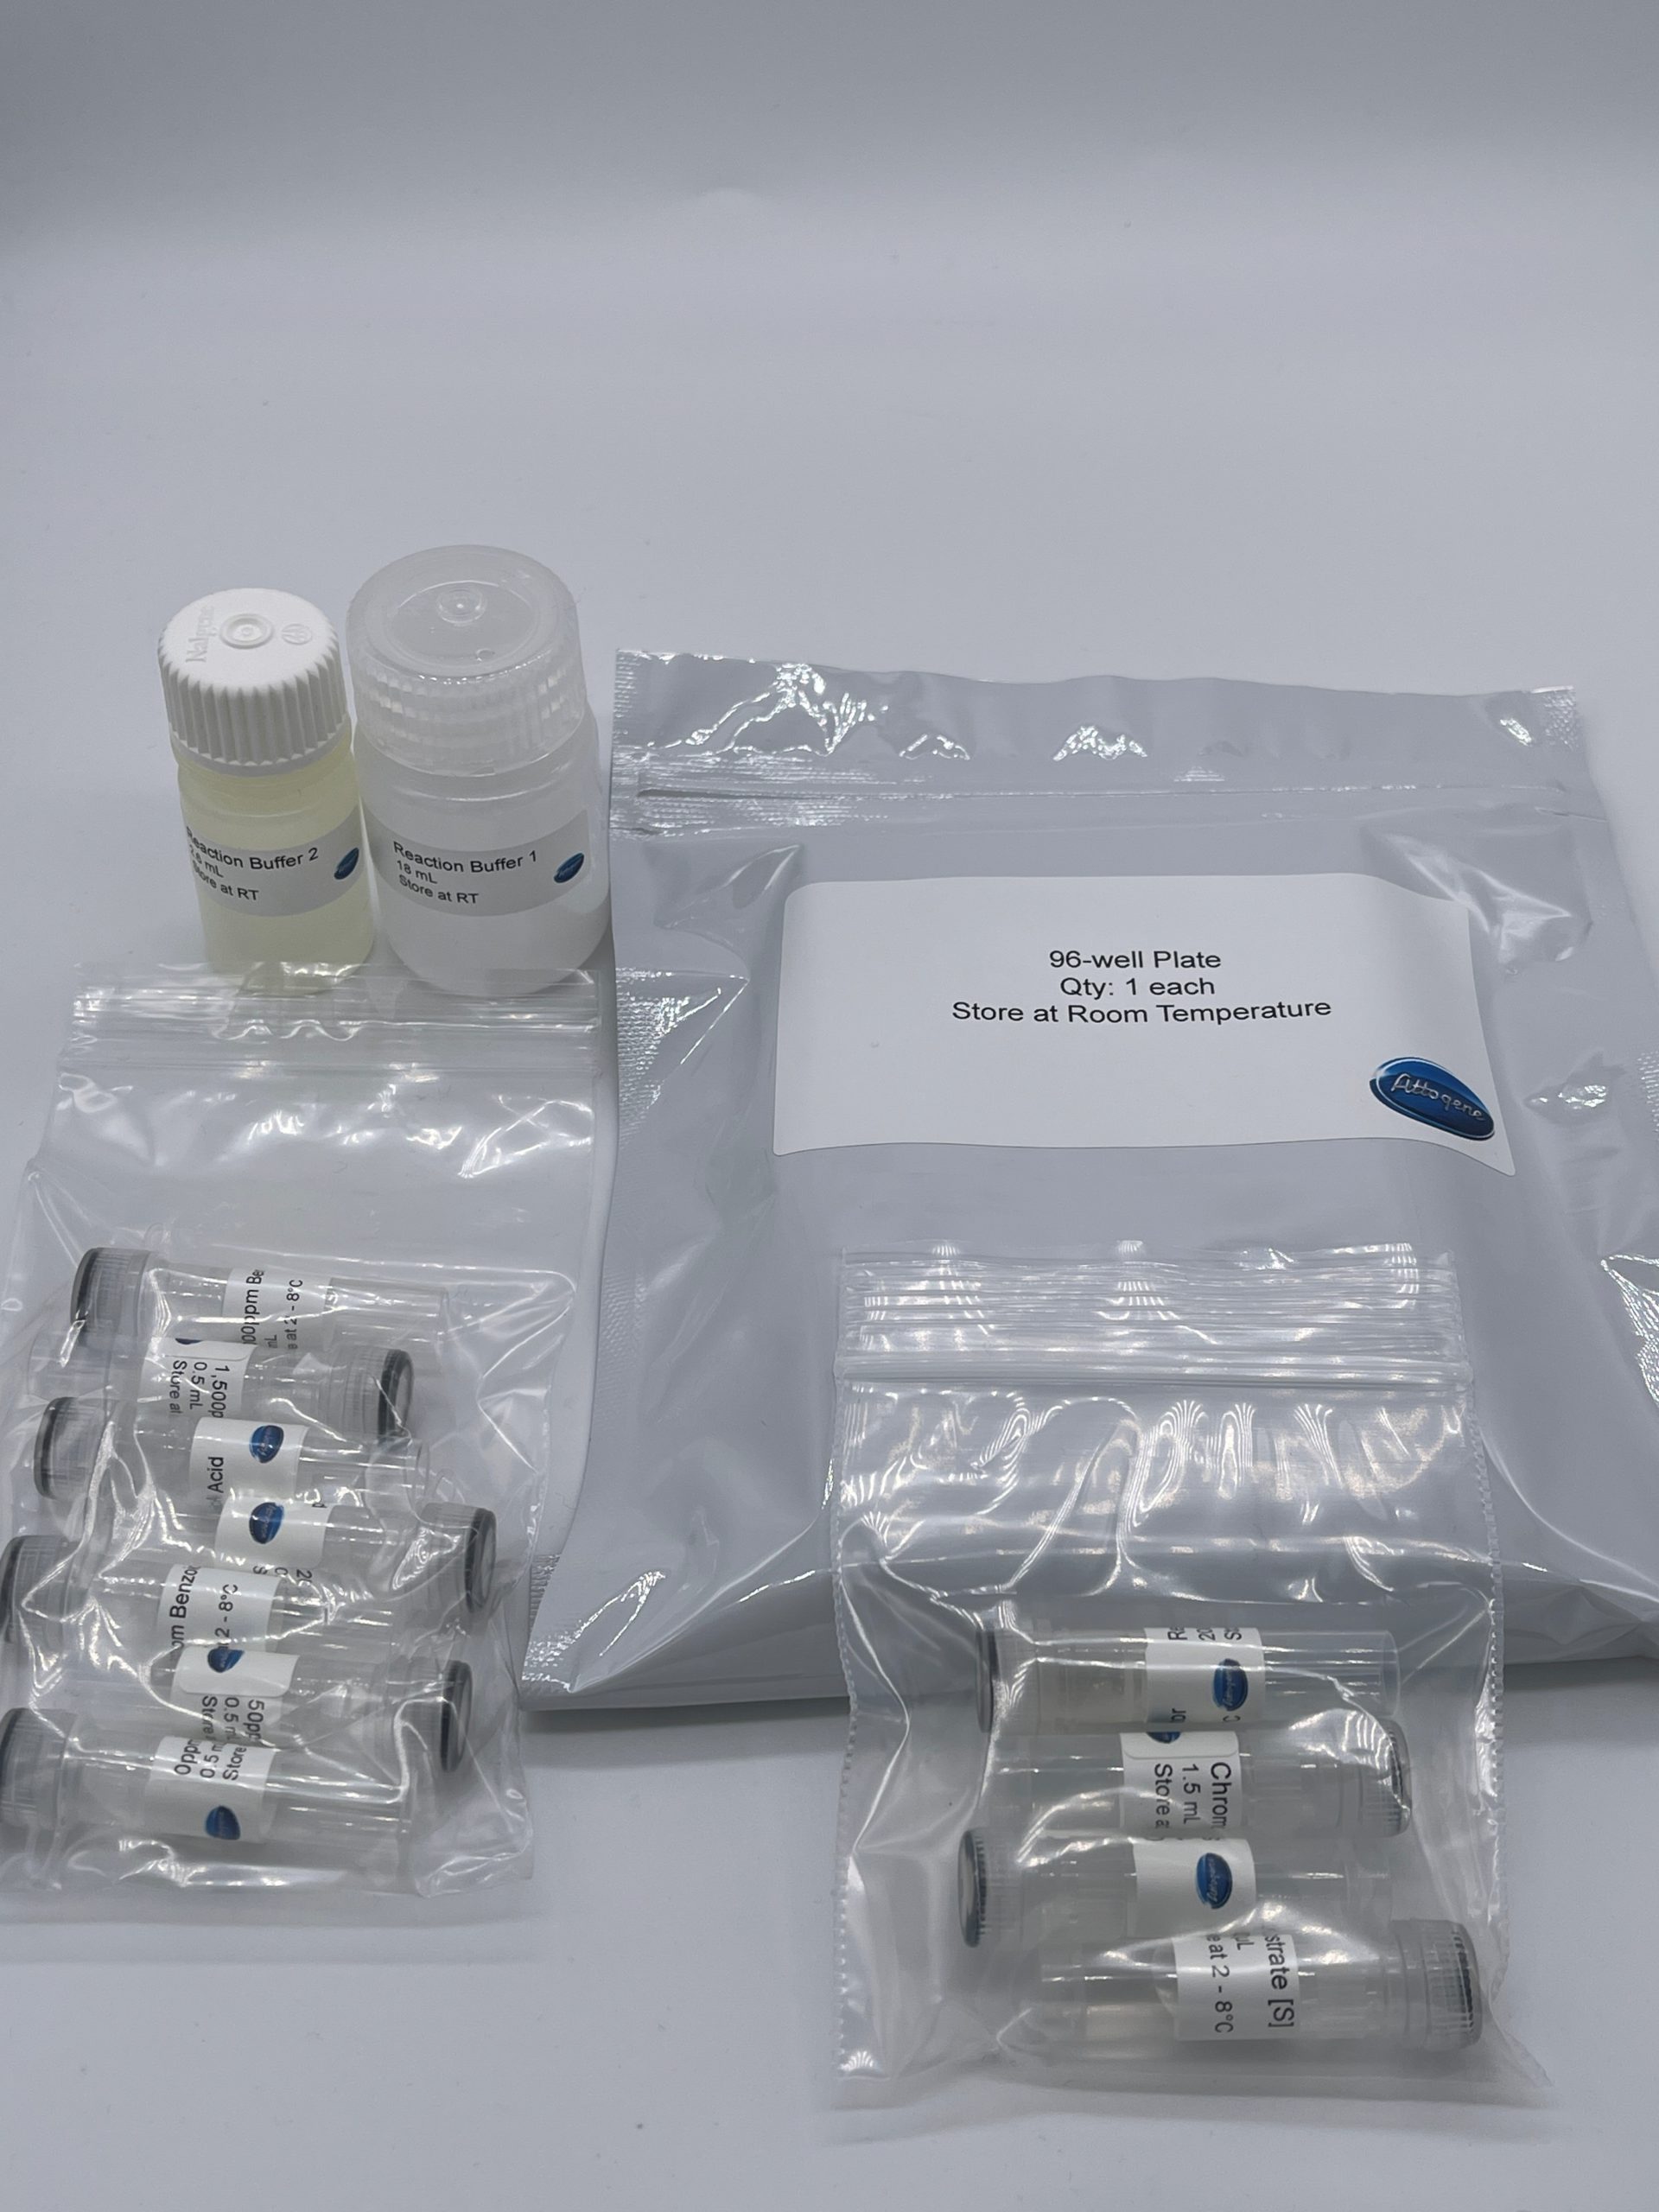 EZ2013 Benzoic Acid Detection Kit